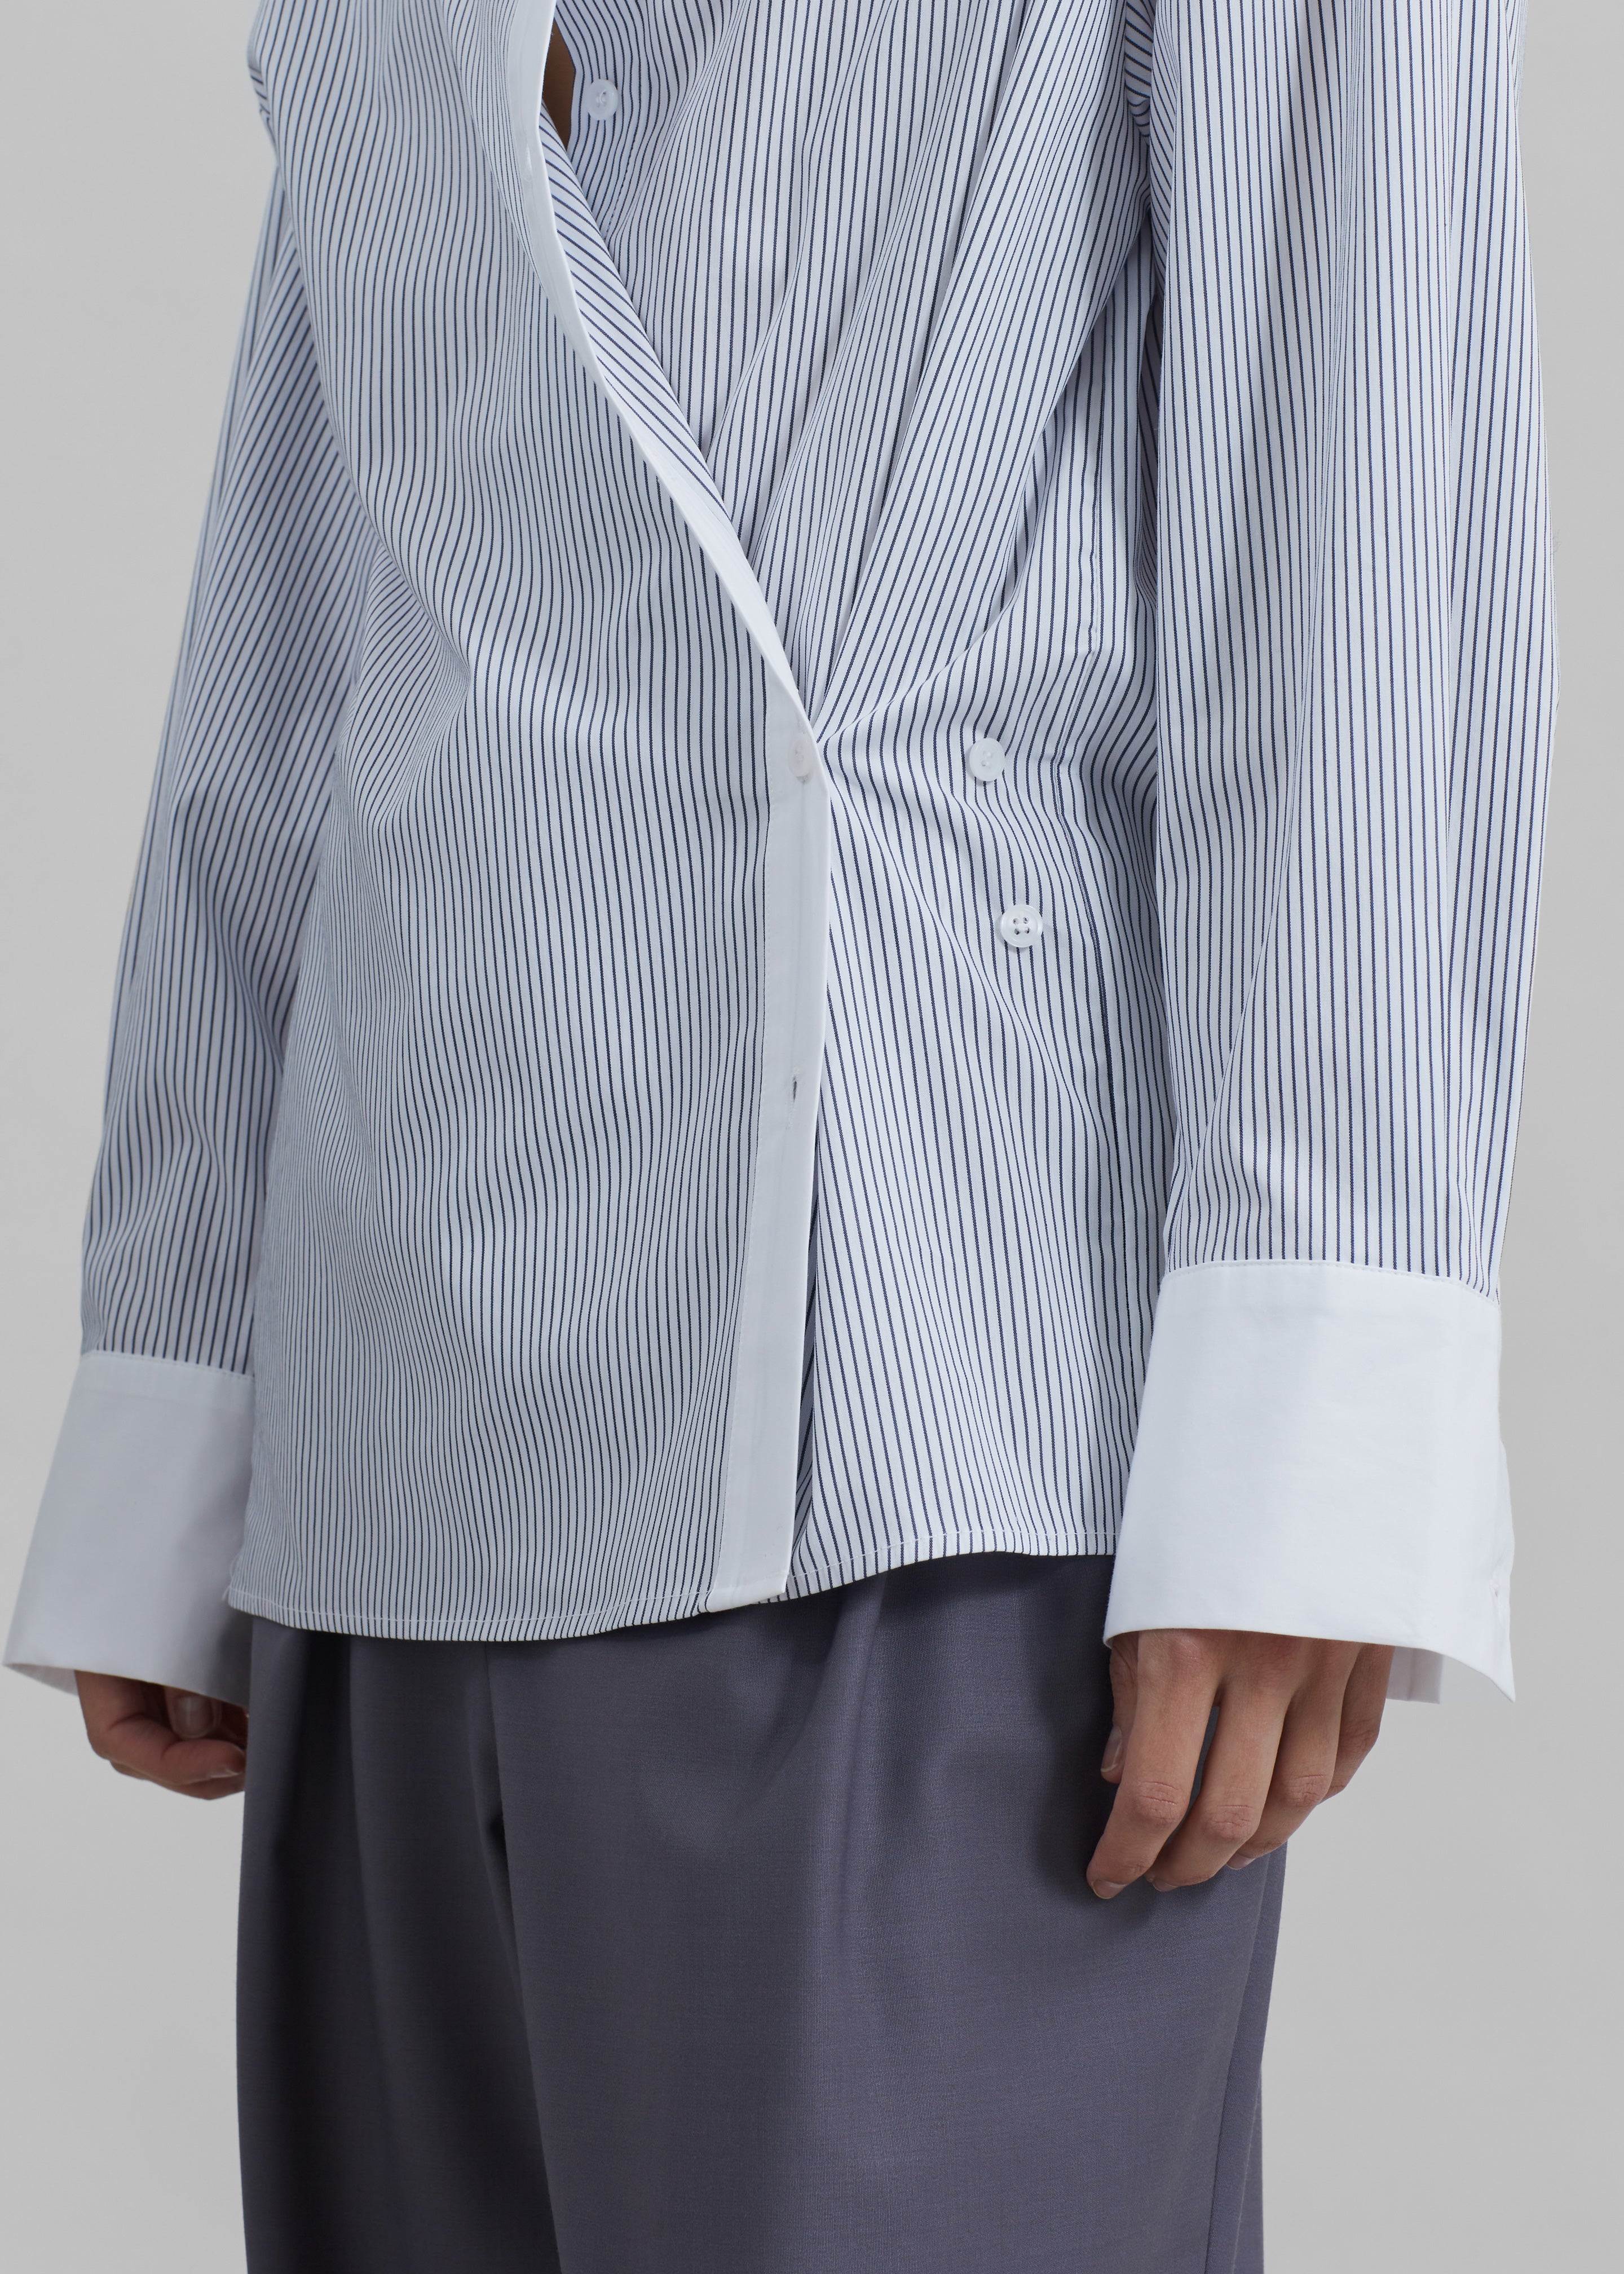 Nerina Button Up Shirt - Black/White Stripe - 6